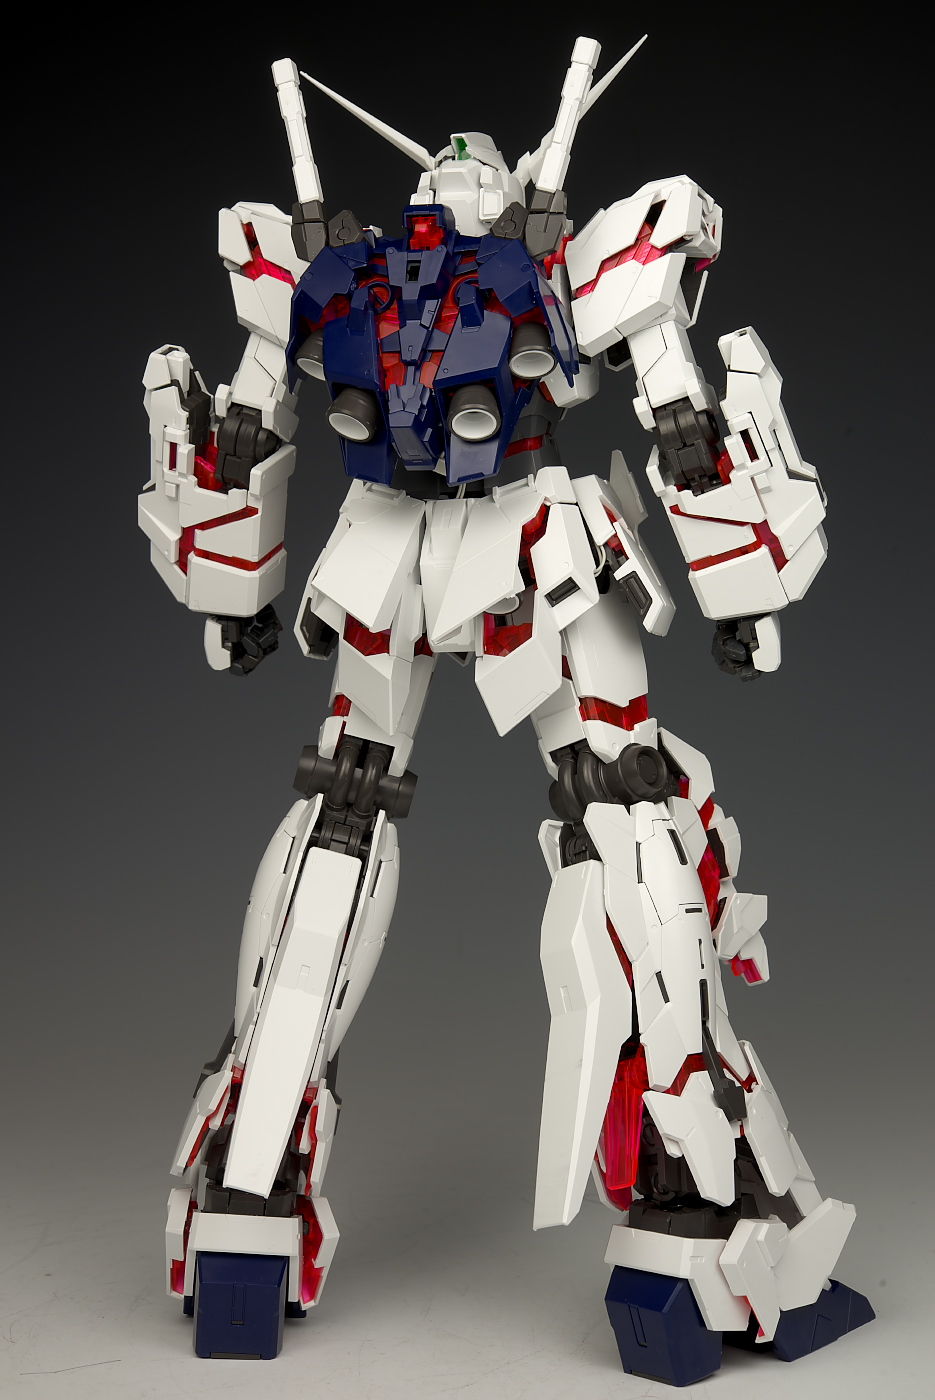 PG 1/60 RX-0 Unicorn Gundam: DESTROY MODE + LEDs unit. ASSEMBLED 